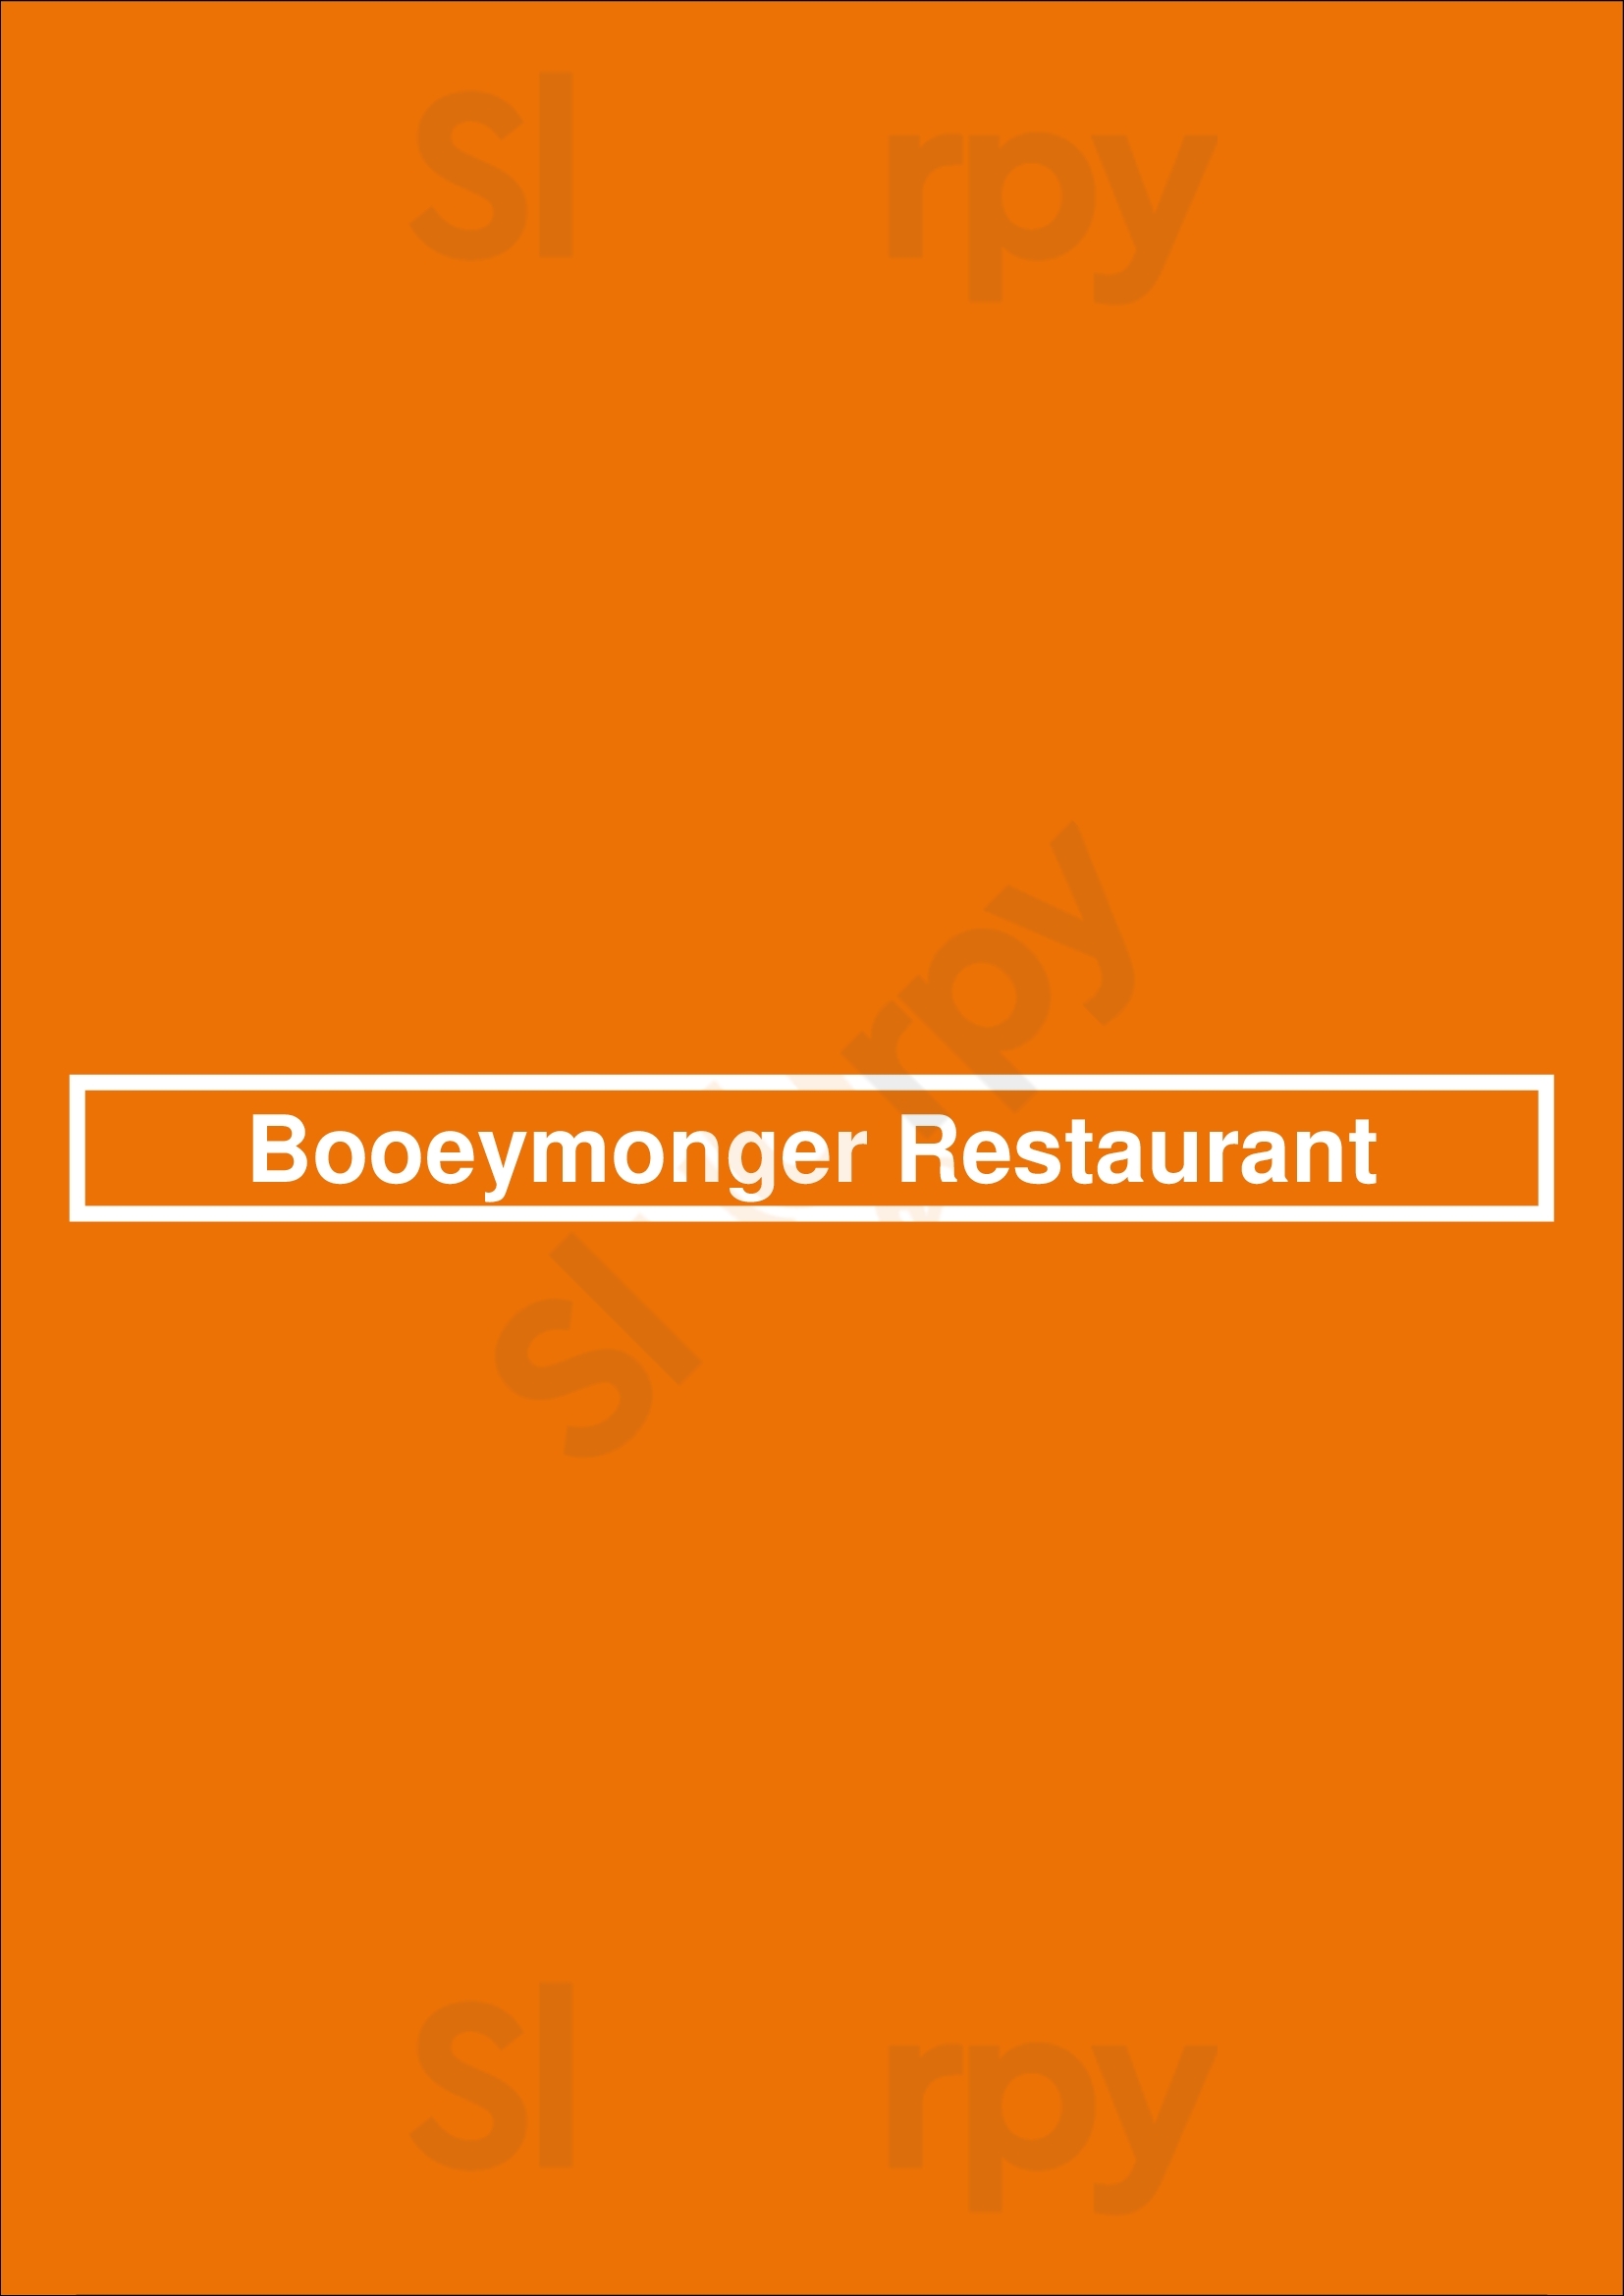 Booeymonger Restaurant Washington DC Menu - 1